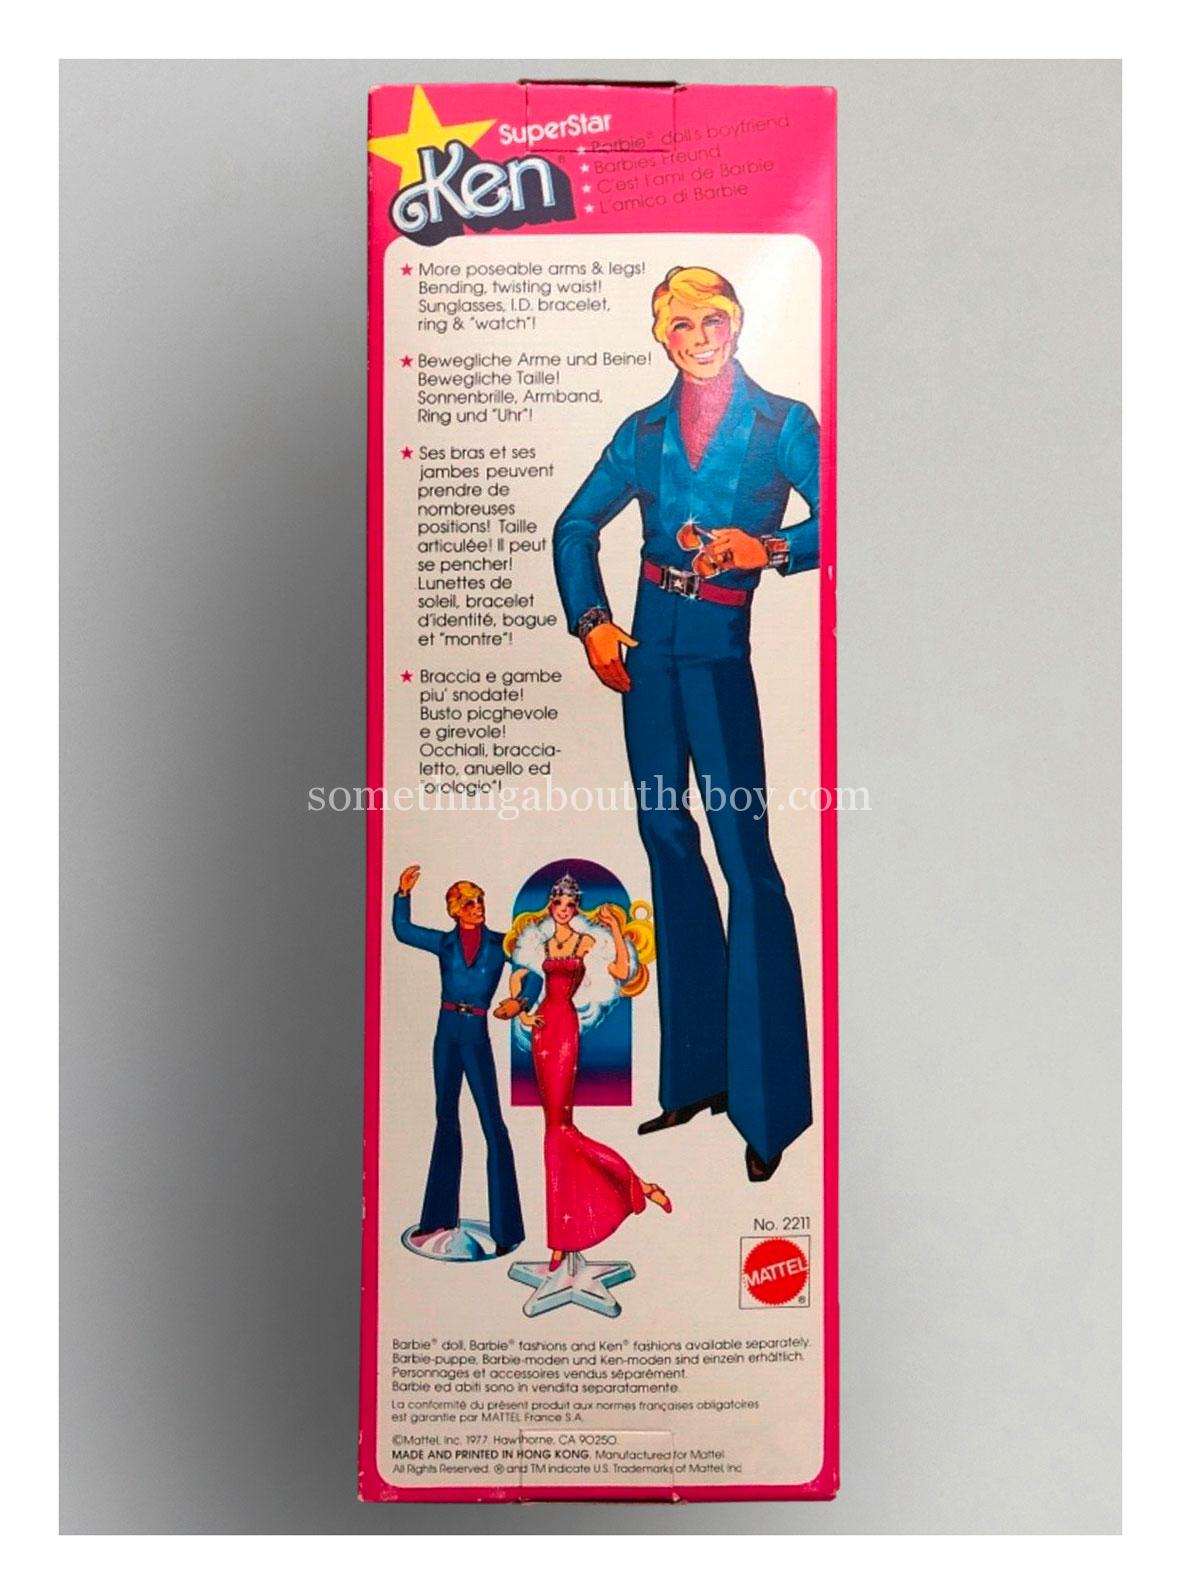 1978 #2211 SuperStar Ken (European version) original packaging